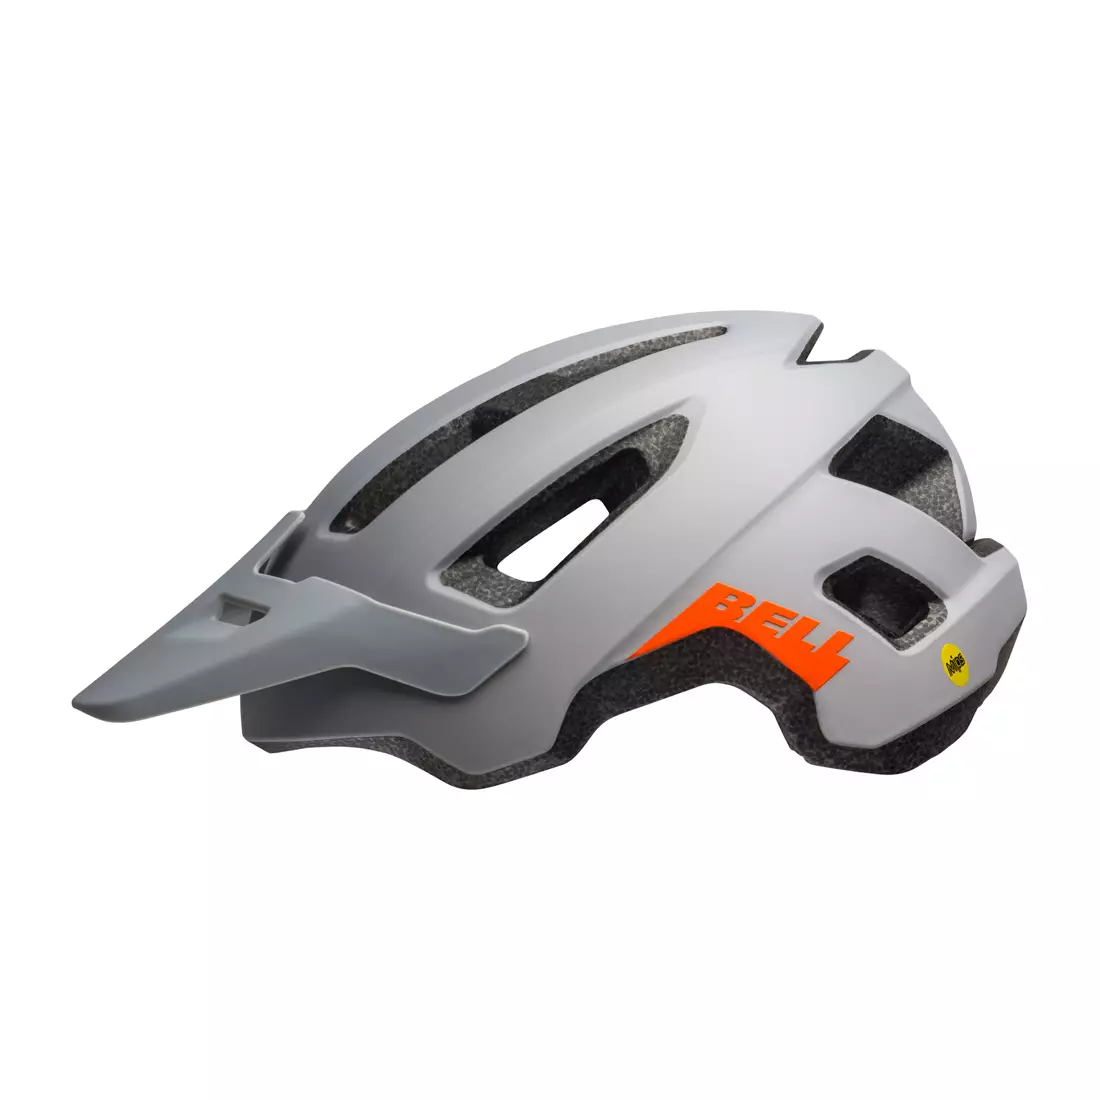 Bicycle helmet mtb BELL NOMAD INTEGRATED MIPS matte dark gray orange 